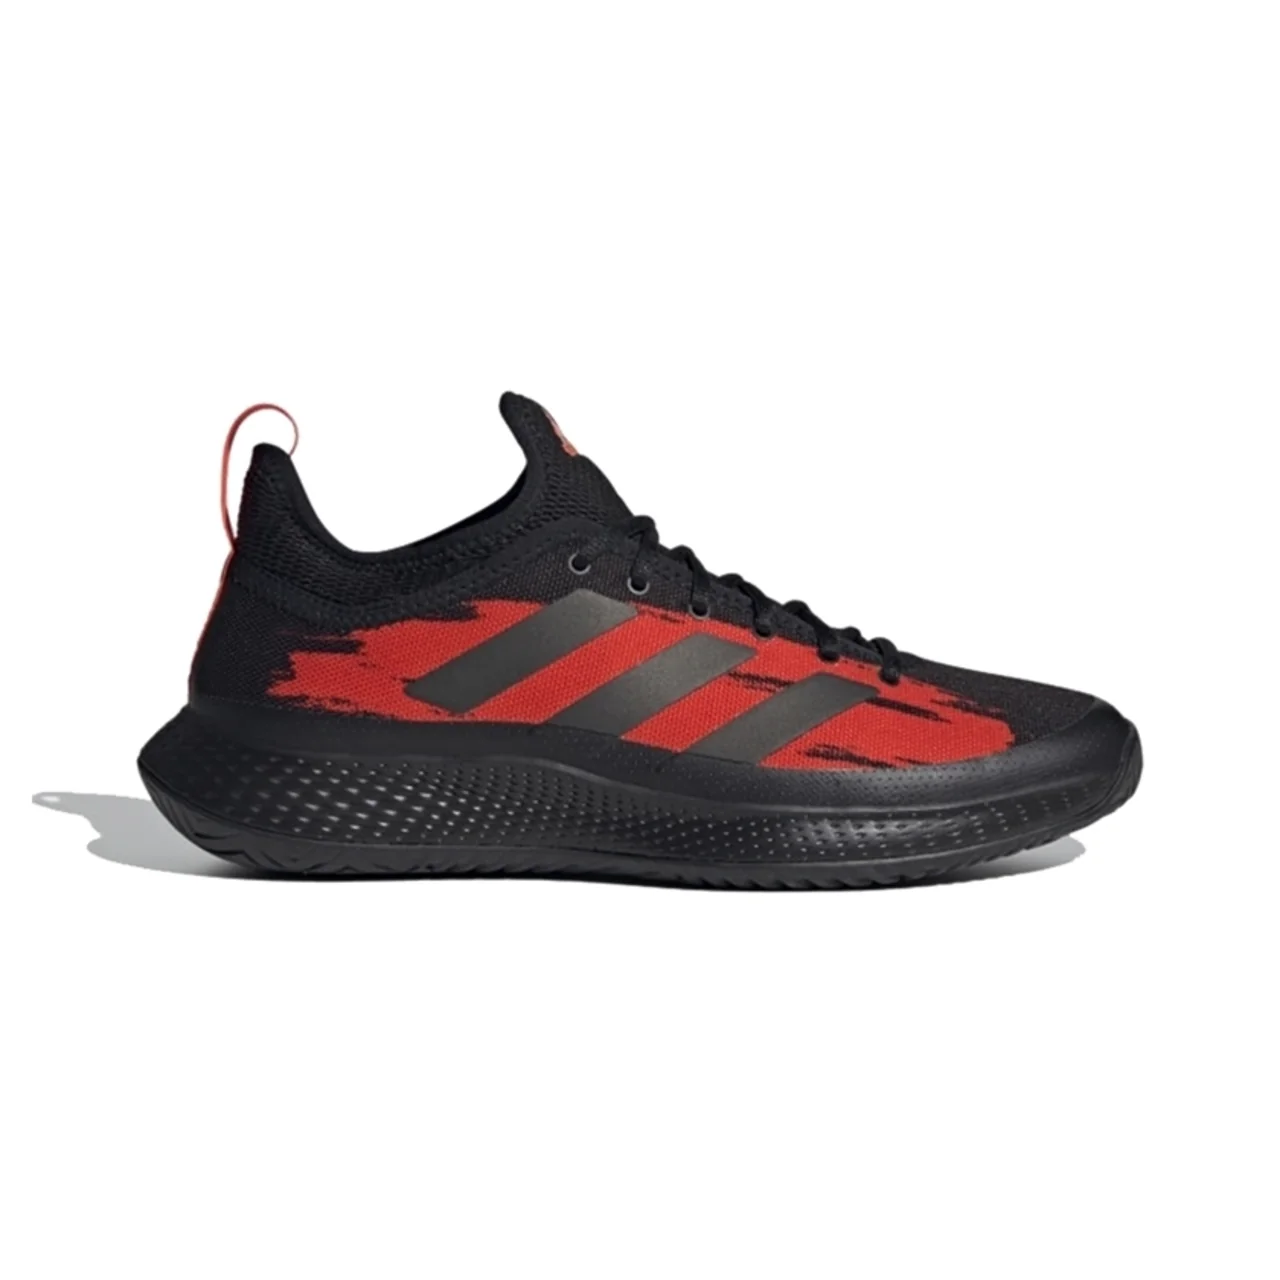 Adidas Defiant Generation M Tennis/padel Black/Red 46